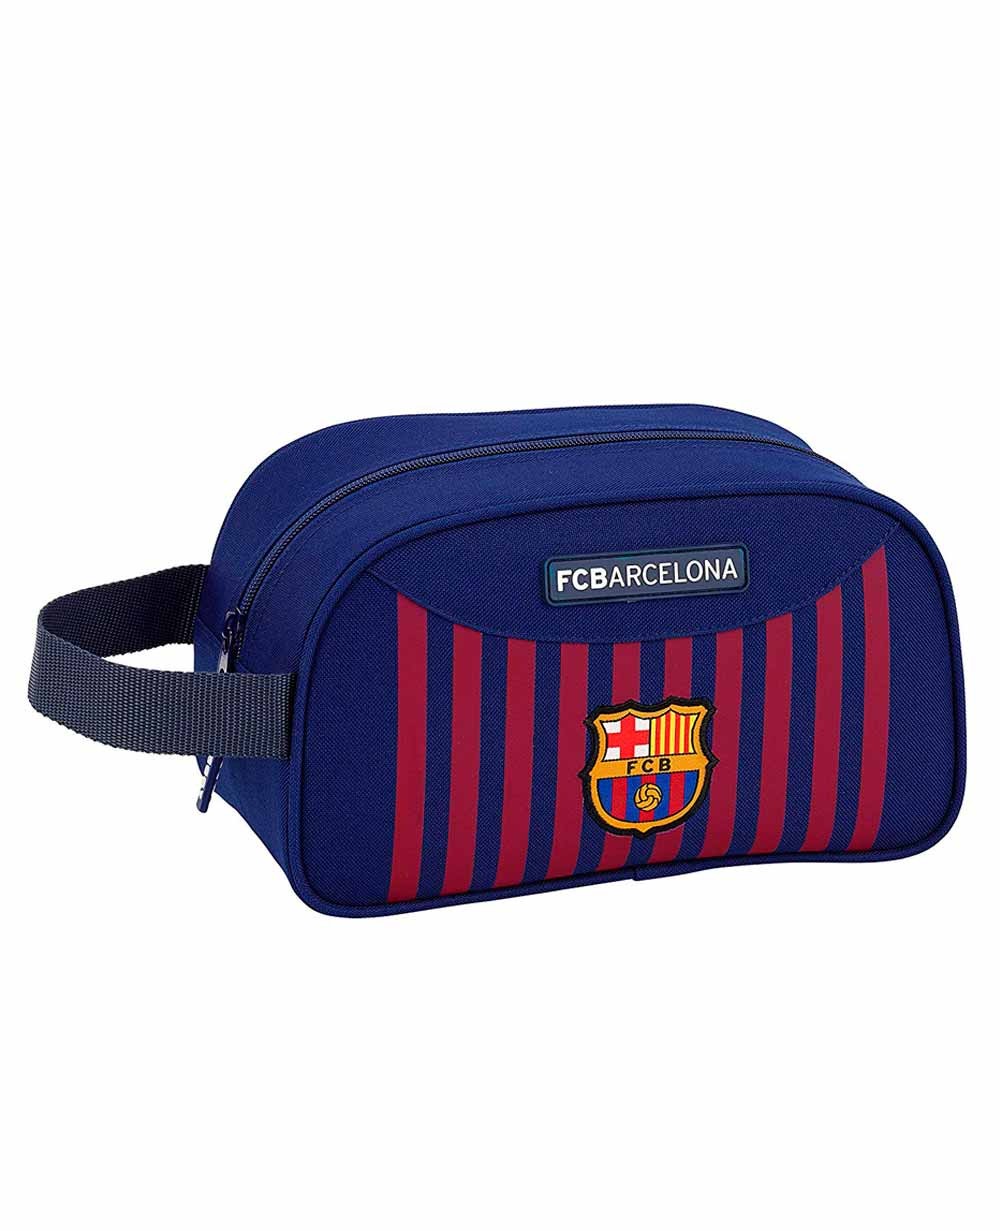 FC Barcelona 811829248 2018 Bolsa de Aseo 26 cm Azul